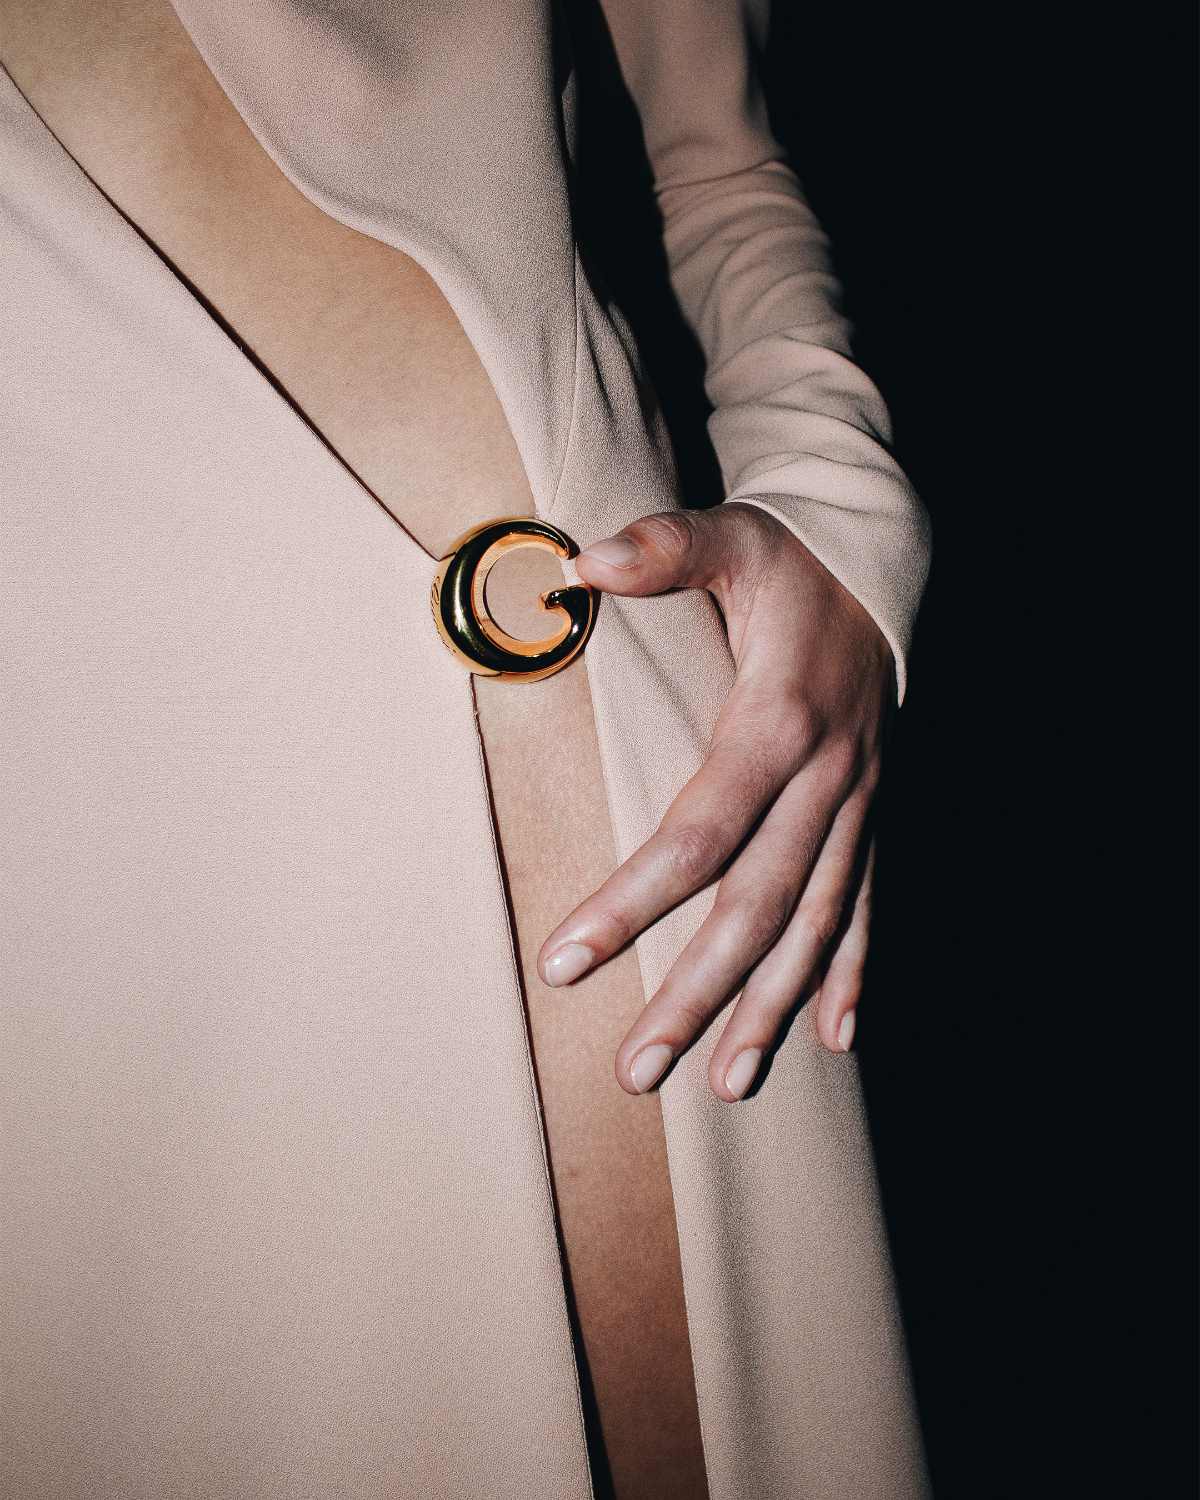 Gucci Presents Ancora Notte, The First Eveningwear Collection Designed By Sabato De Sarno